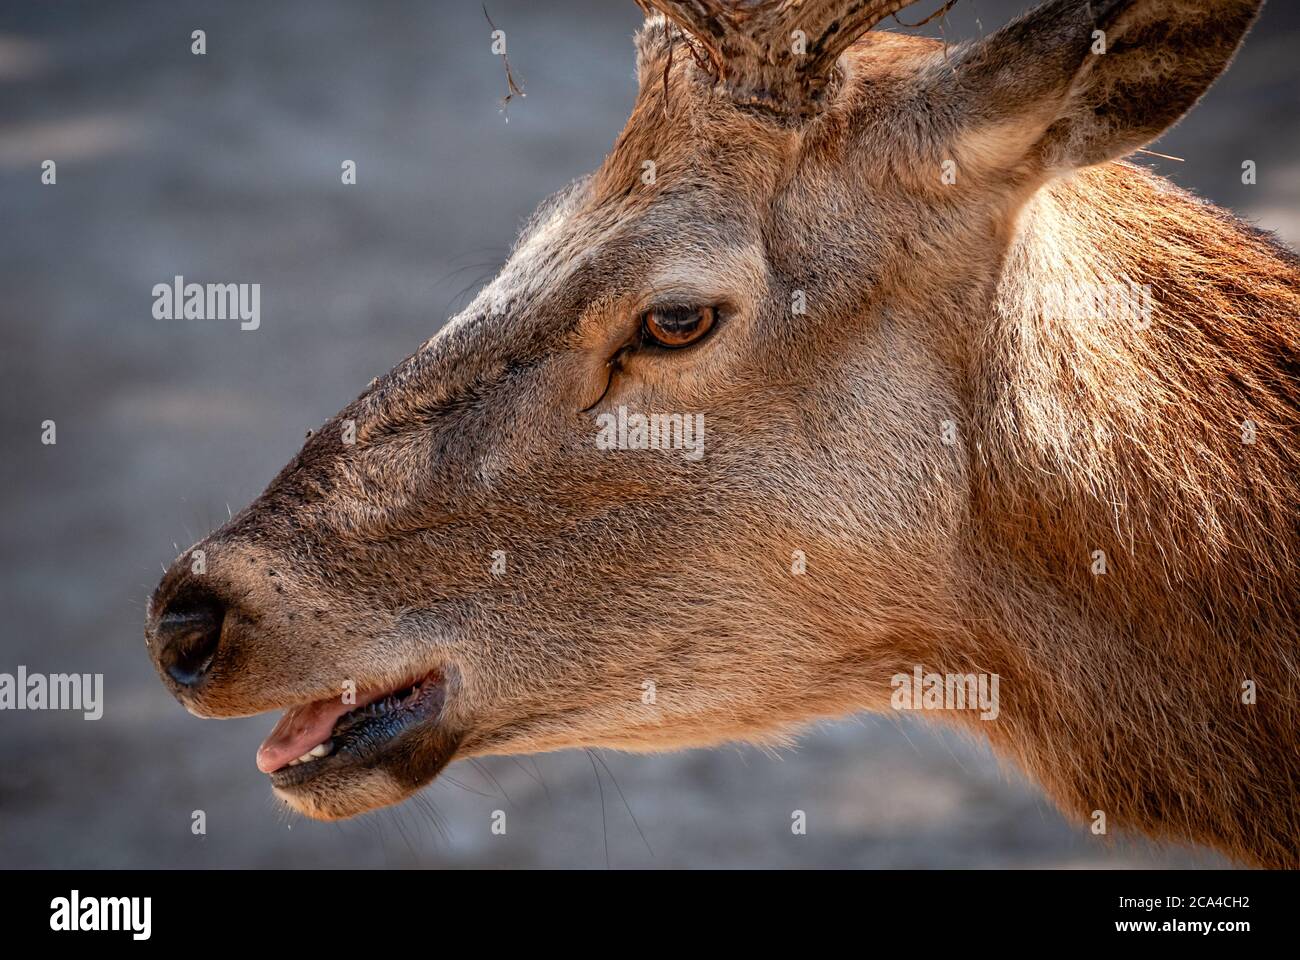 The red deer (Cervus elaphus) is one of the largest deer species. Stock Photo